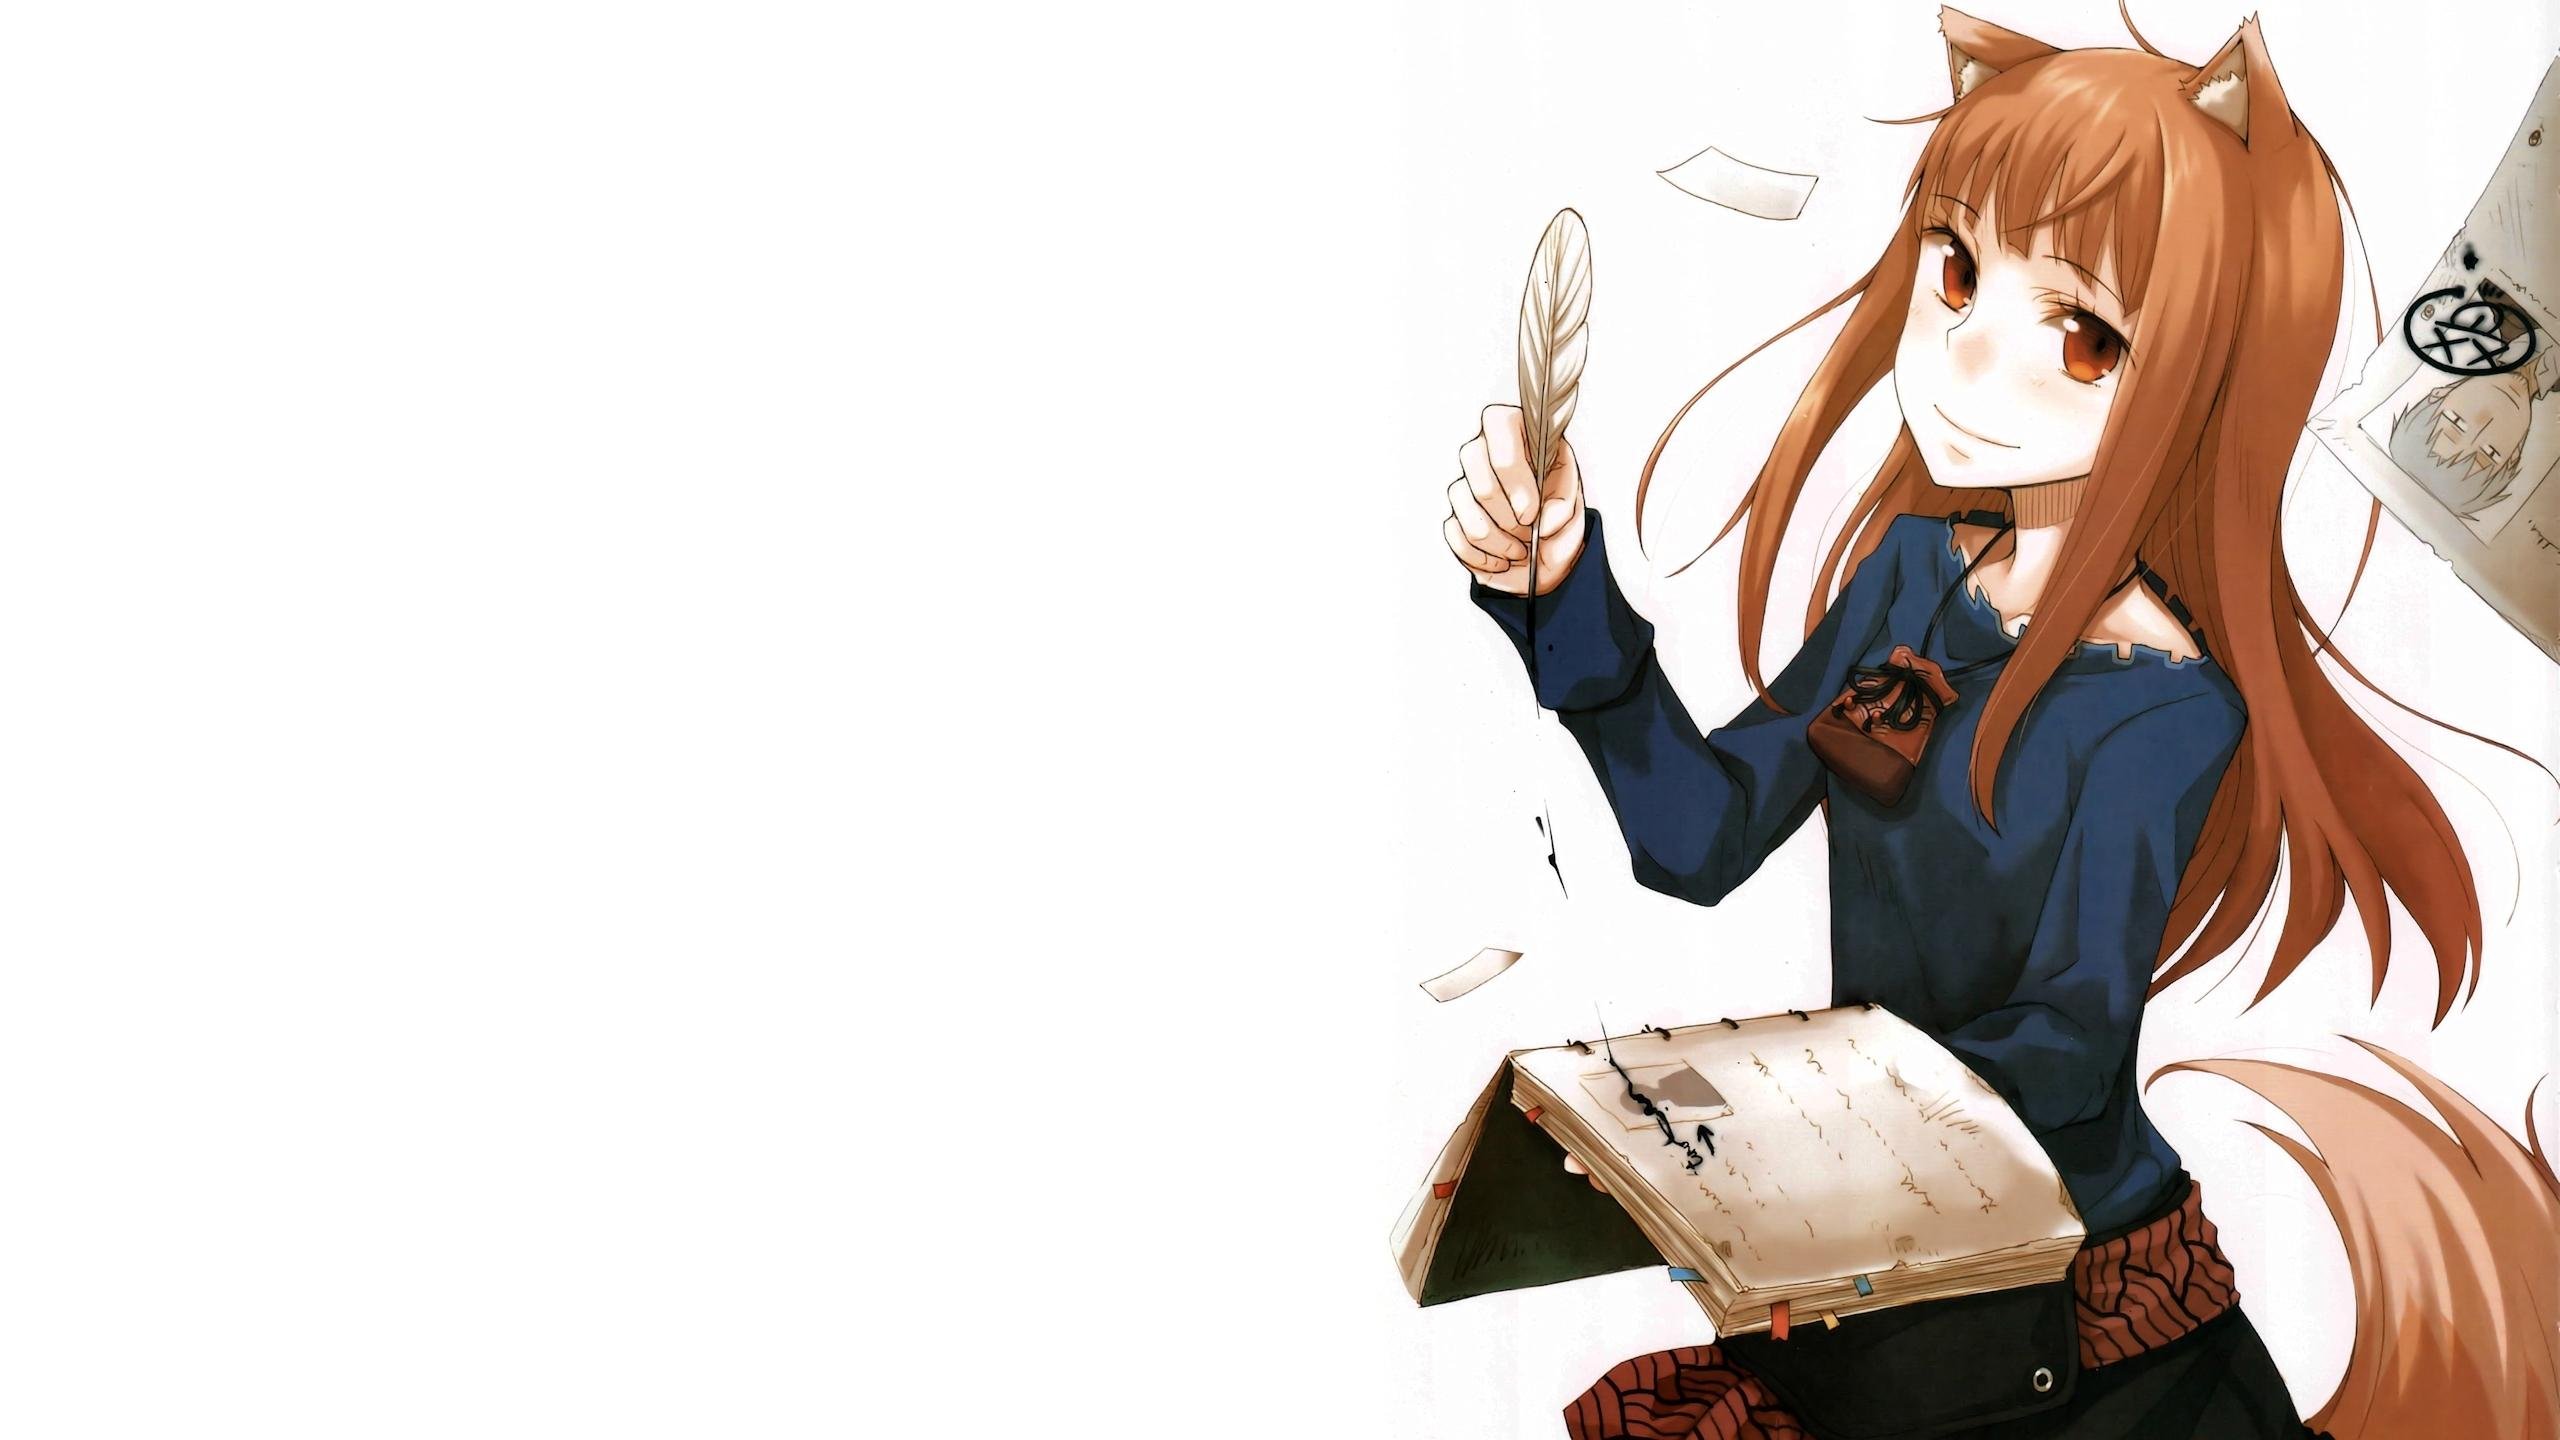 Anime Wolf Girl Wallpaper 824129 Hd Wallpaper Backgrounds